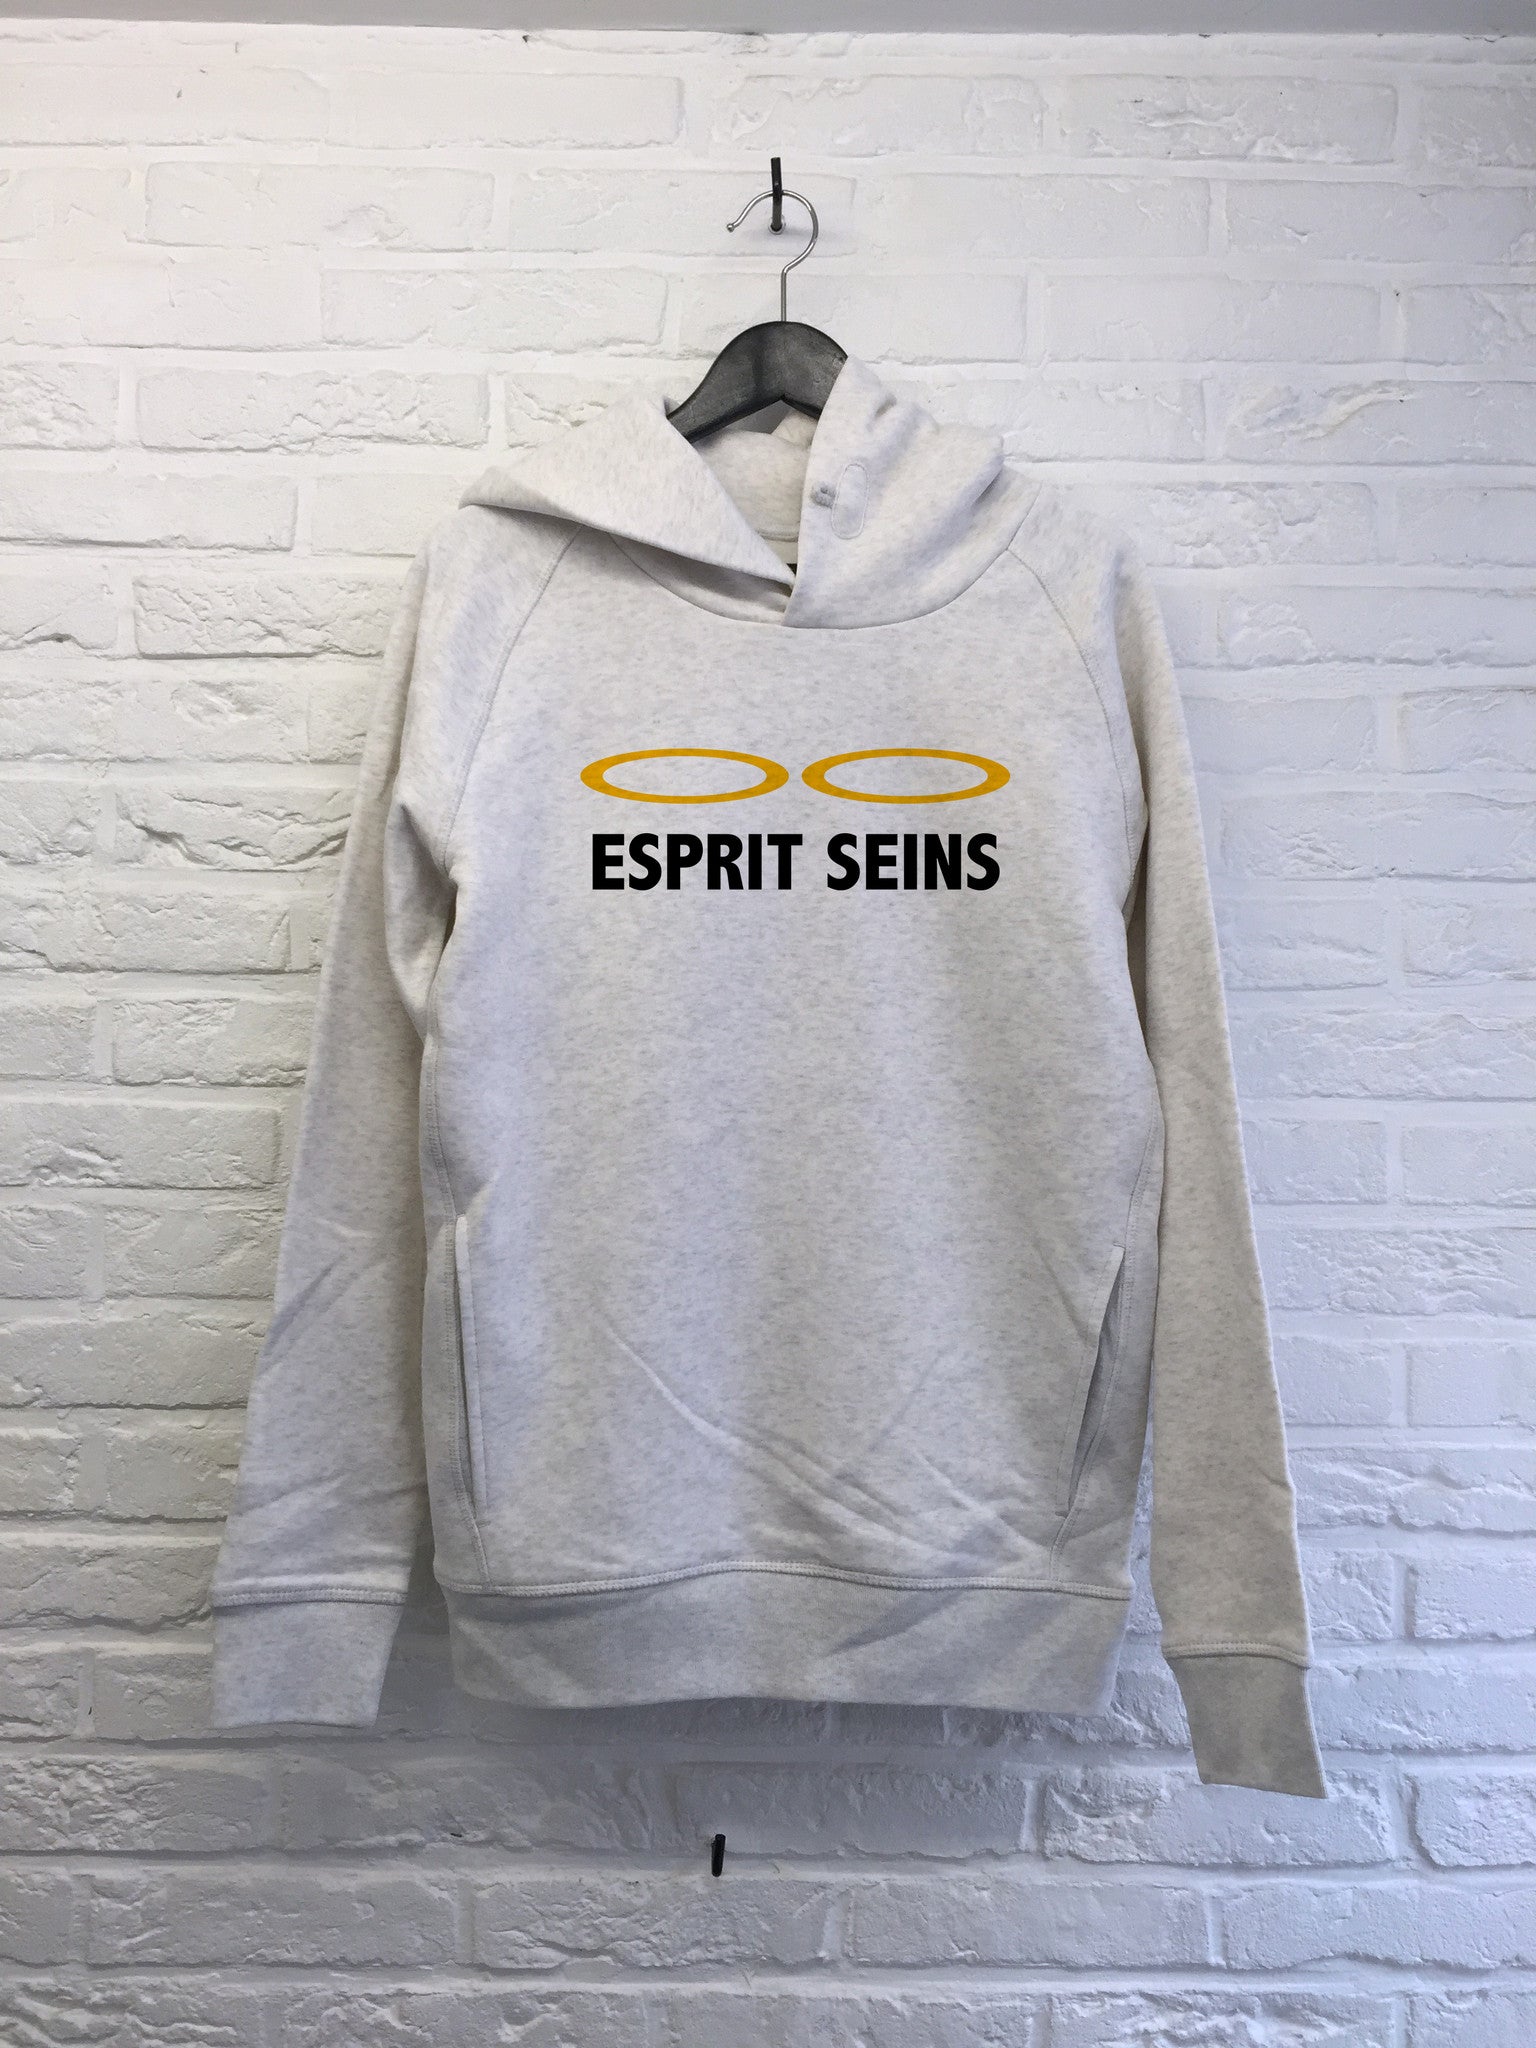 Esprit Seins - Hoodies Deluxe-Sweat shirts-Atelier Amelot